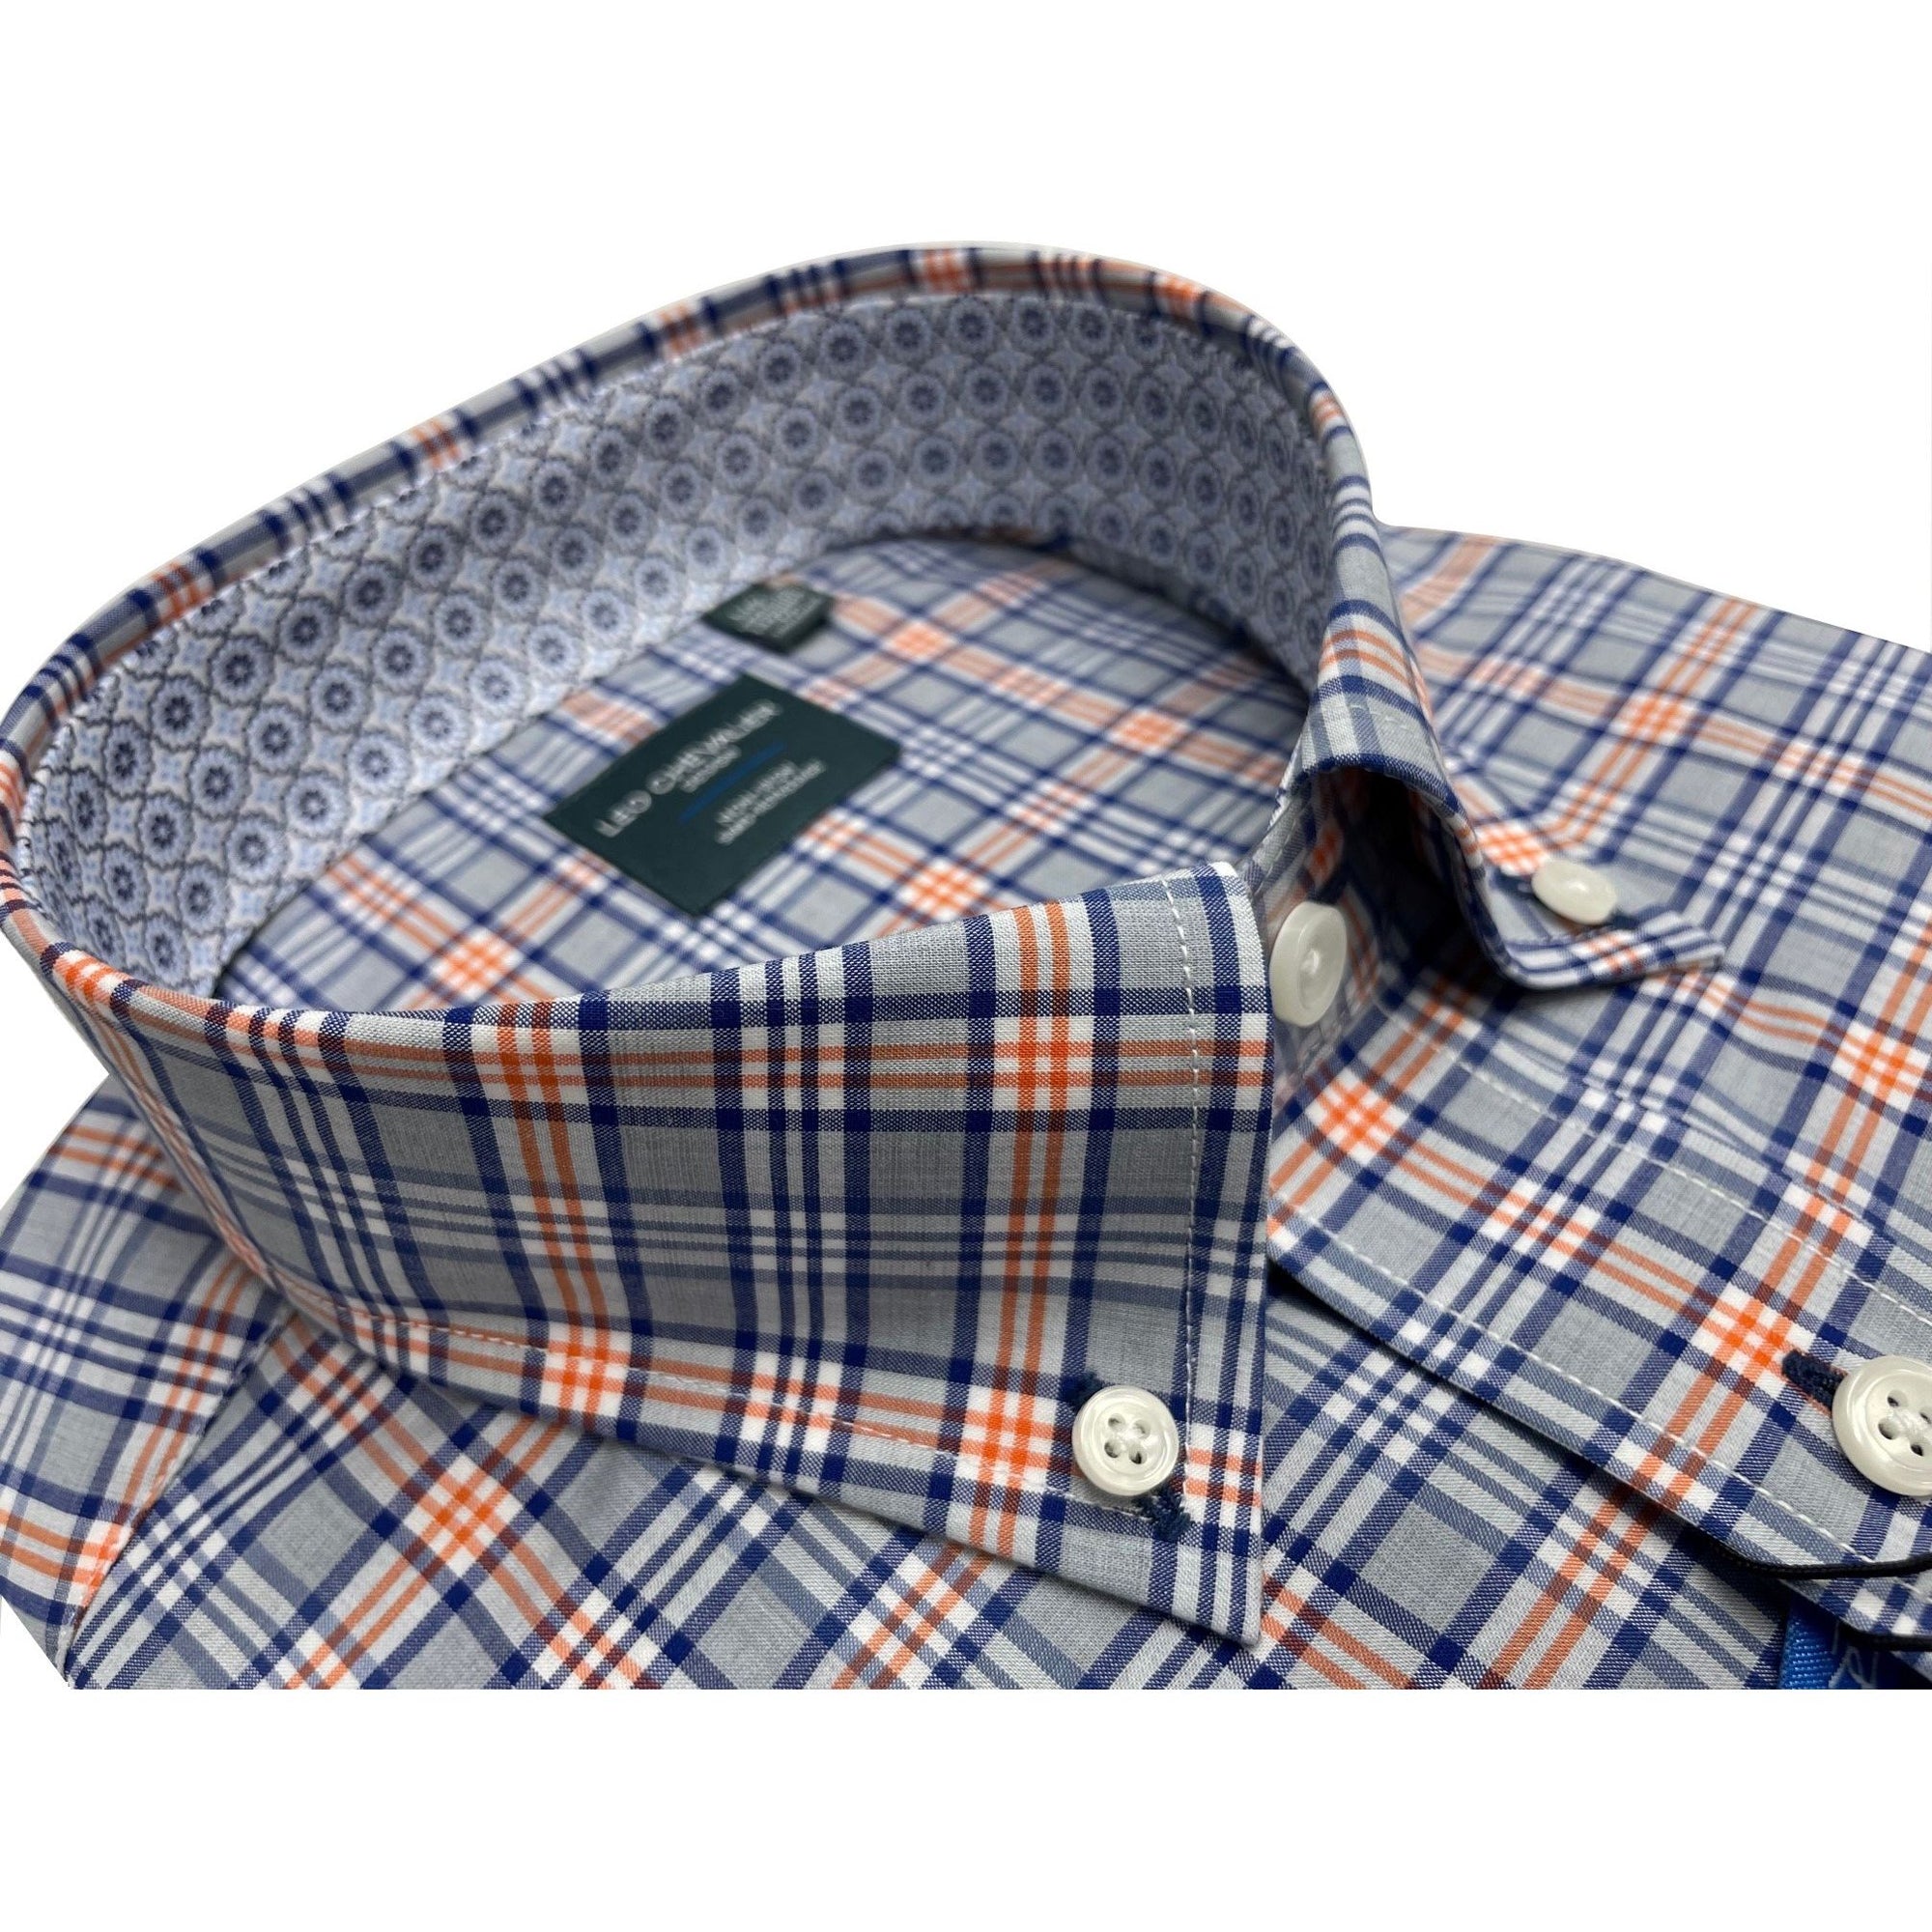 Grey, Navy, and Orange Plaid No-Iron Cotton Sport Shirt with Button Do